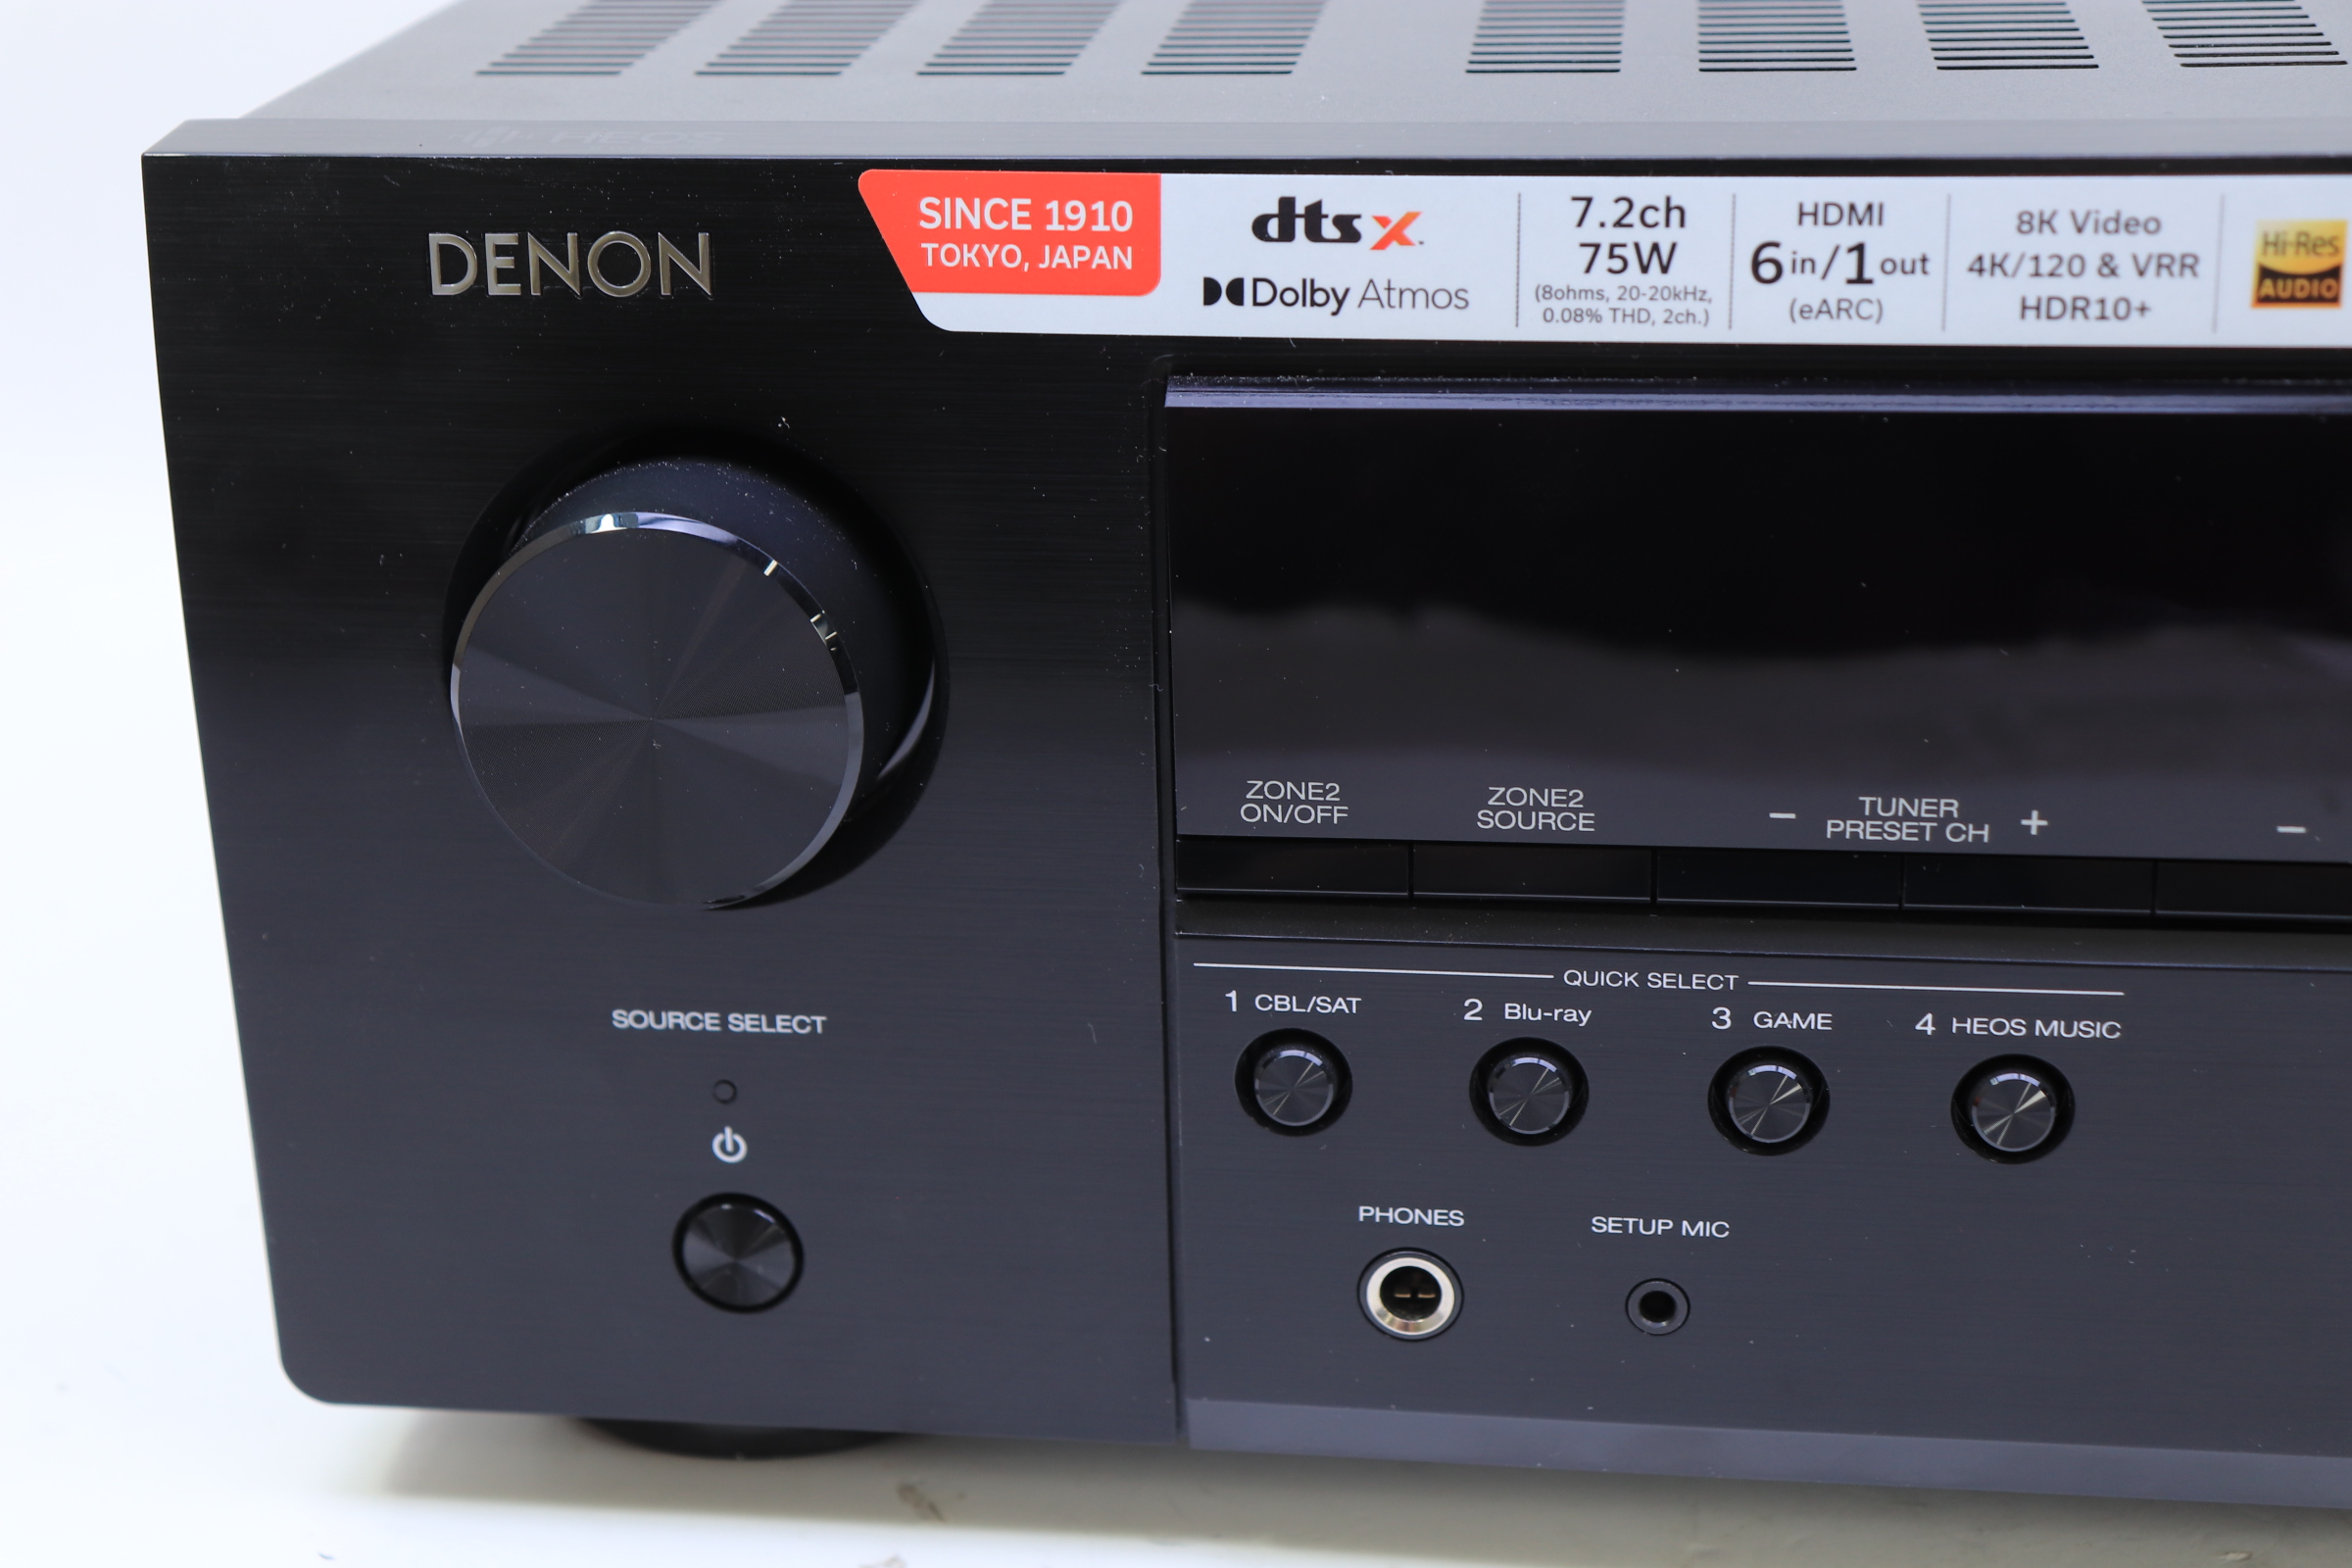 Denon AVR-S760H 7.2ch 4K AV Receiver with Voice Control Compatibility